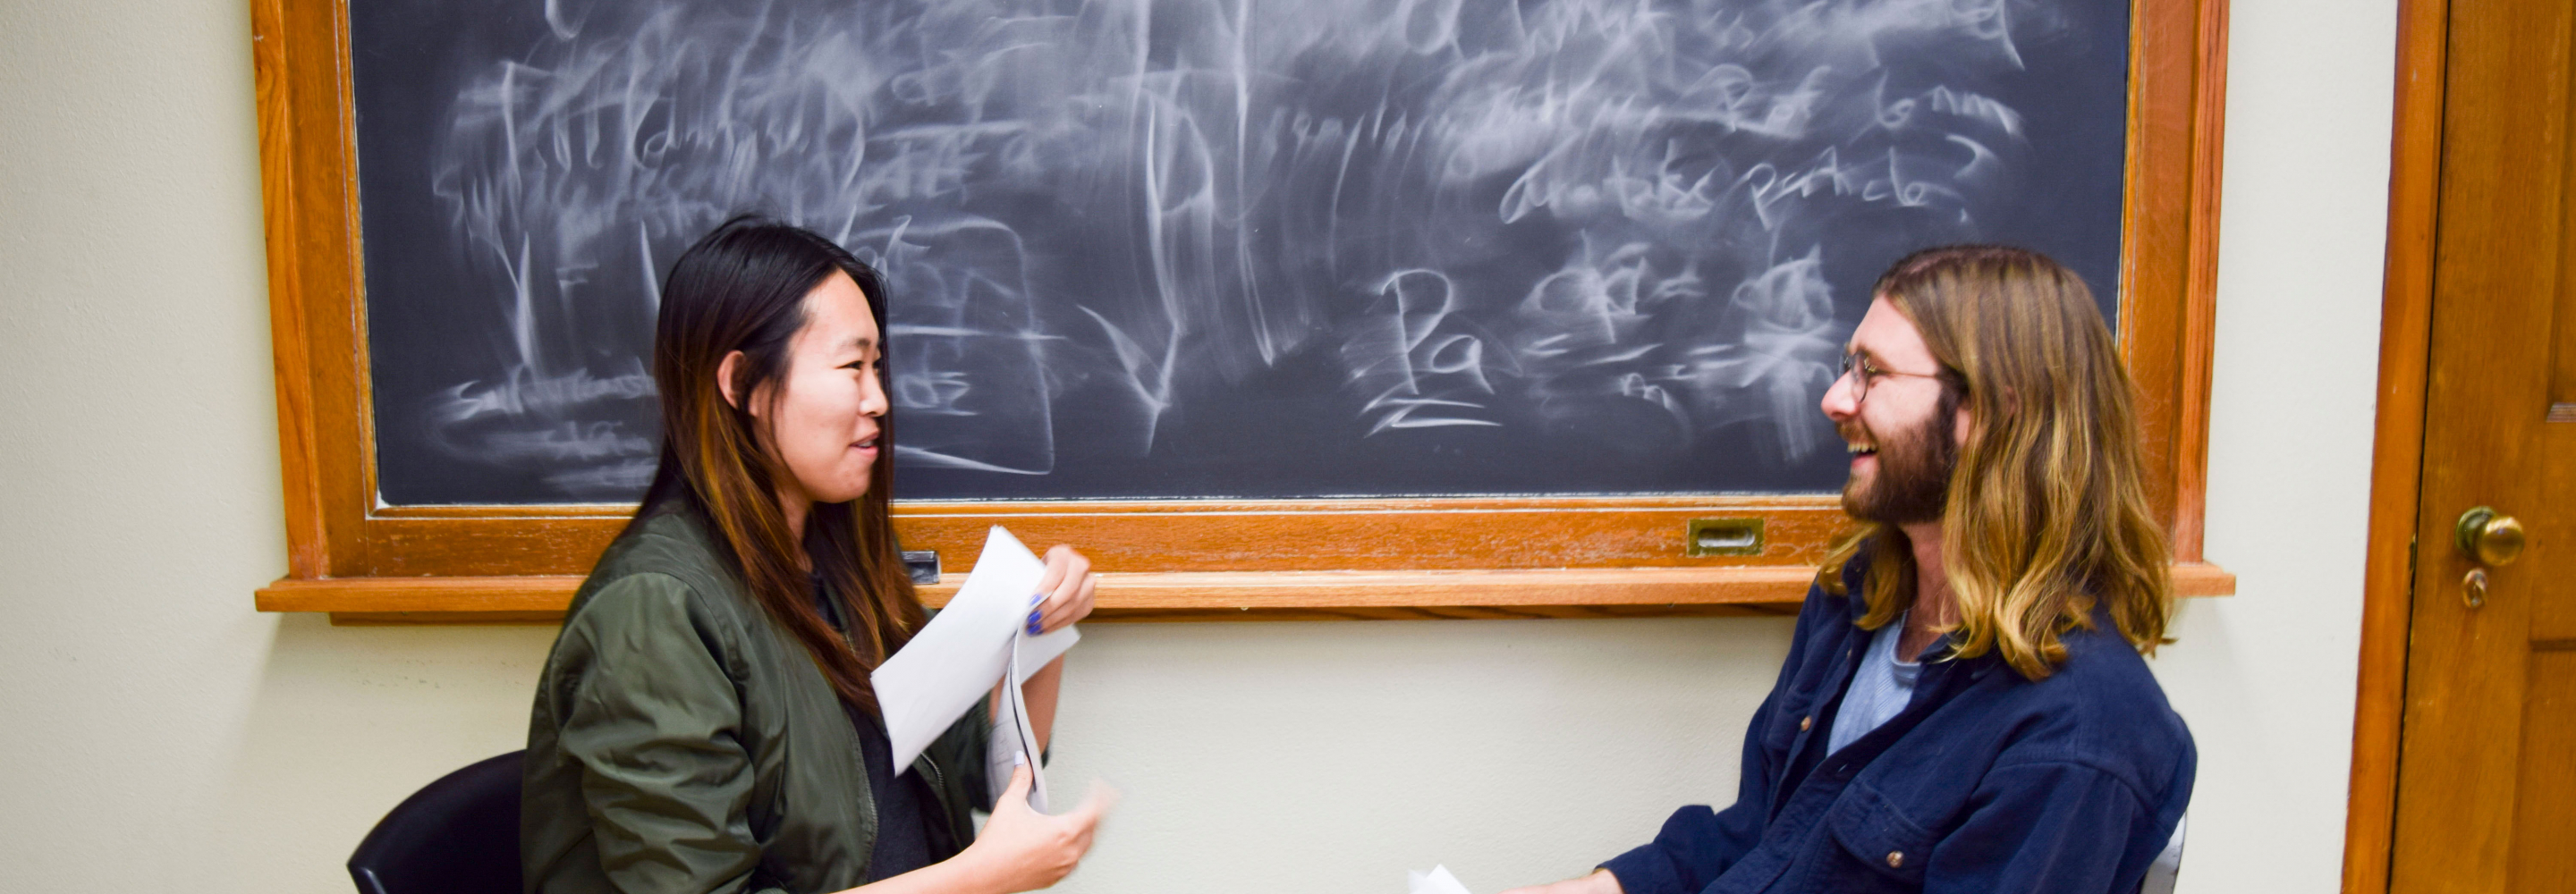 Two students sit in front of a blackboard talking